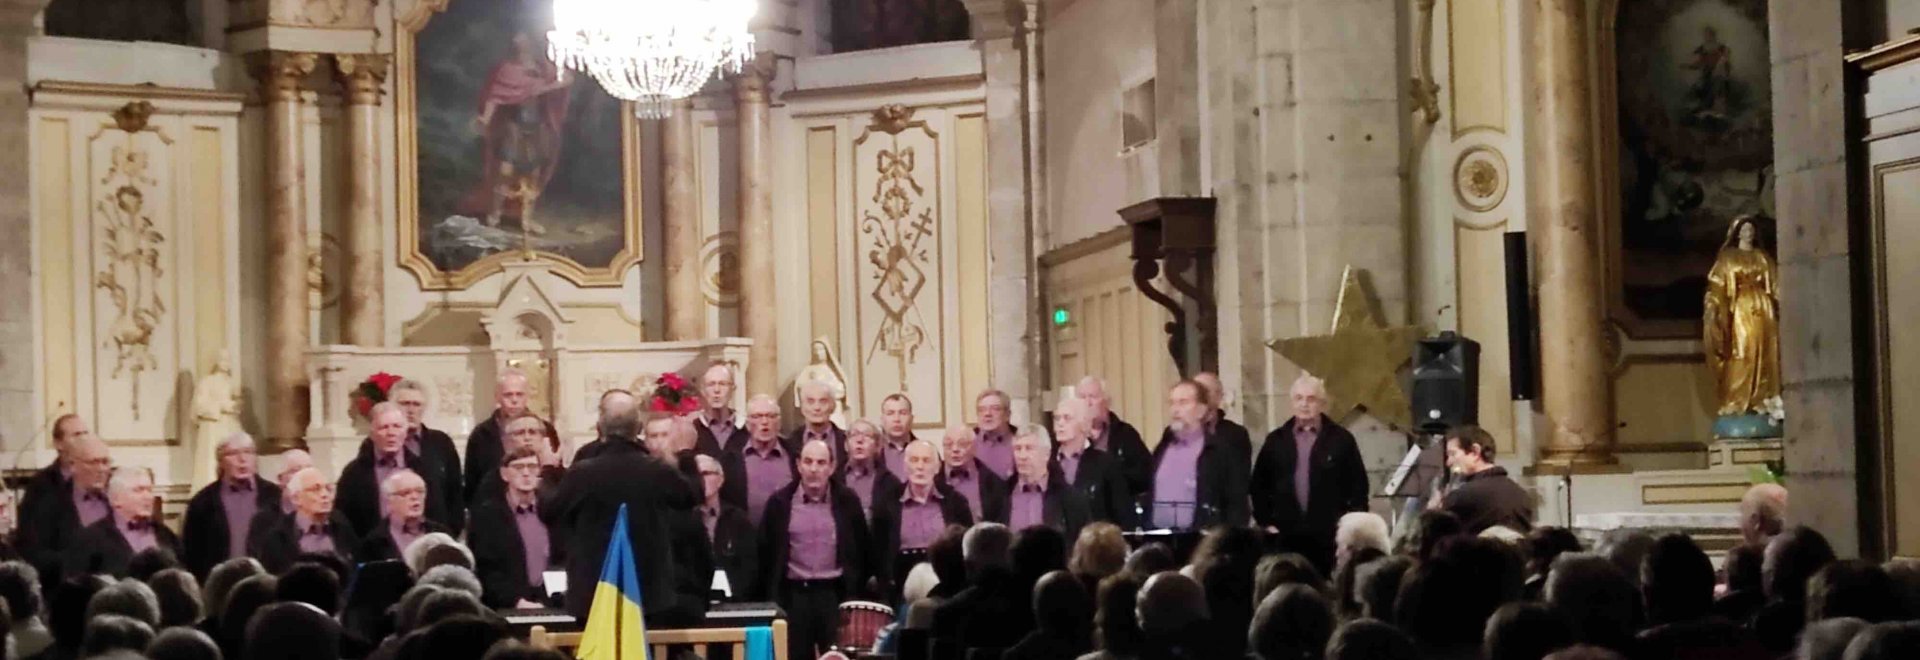 Concert de Noël de Saône